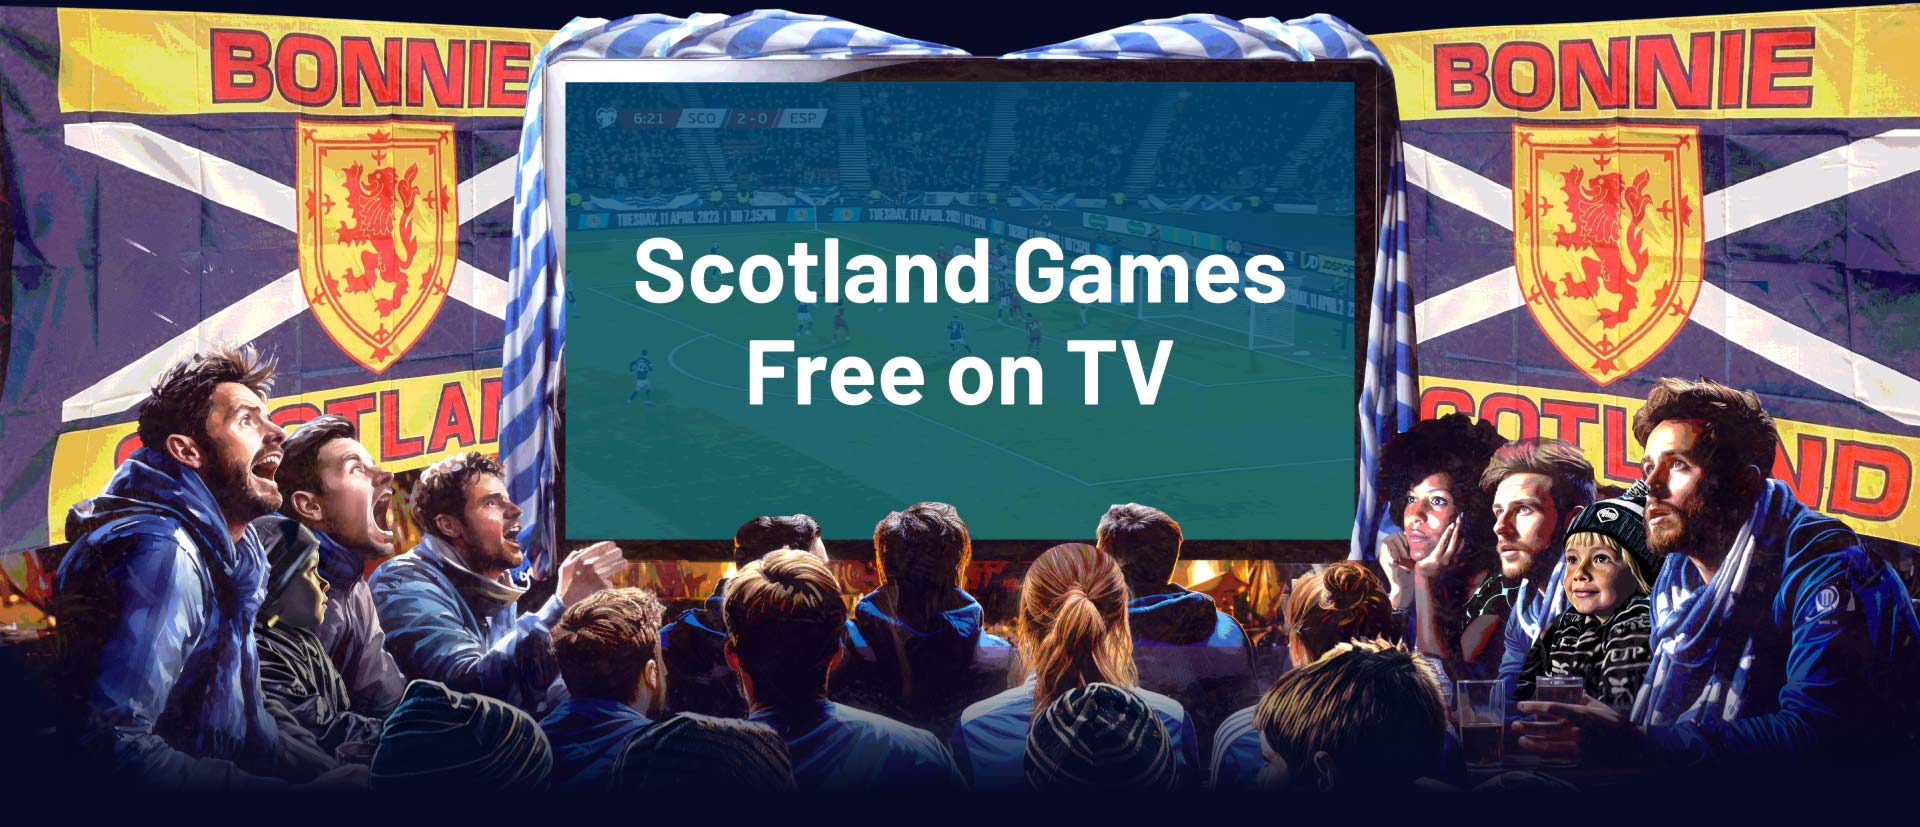 Scotland Games Free On TV